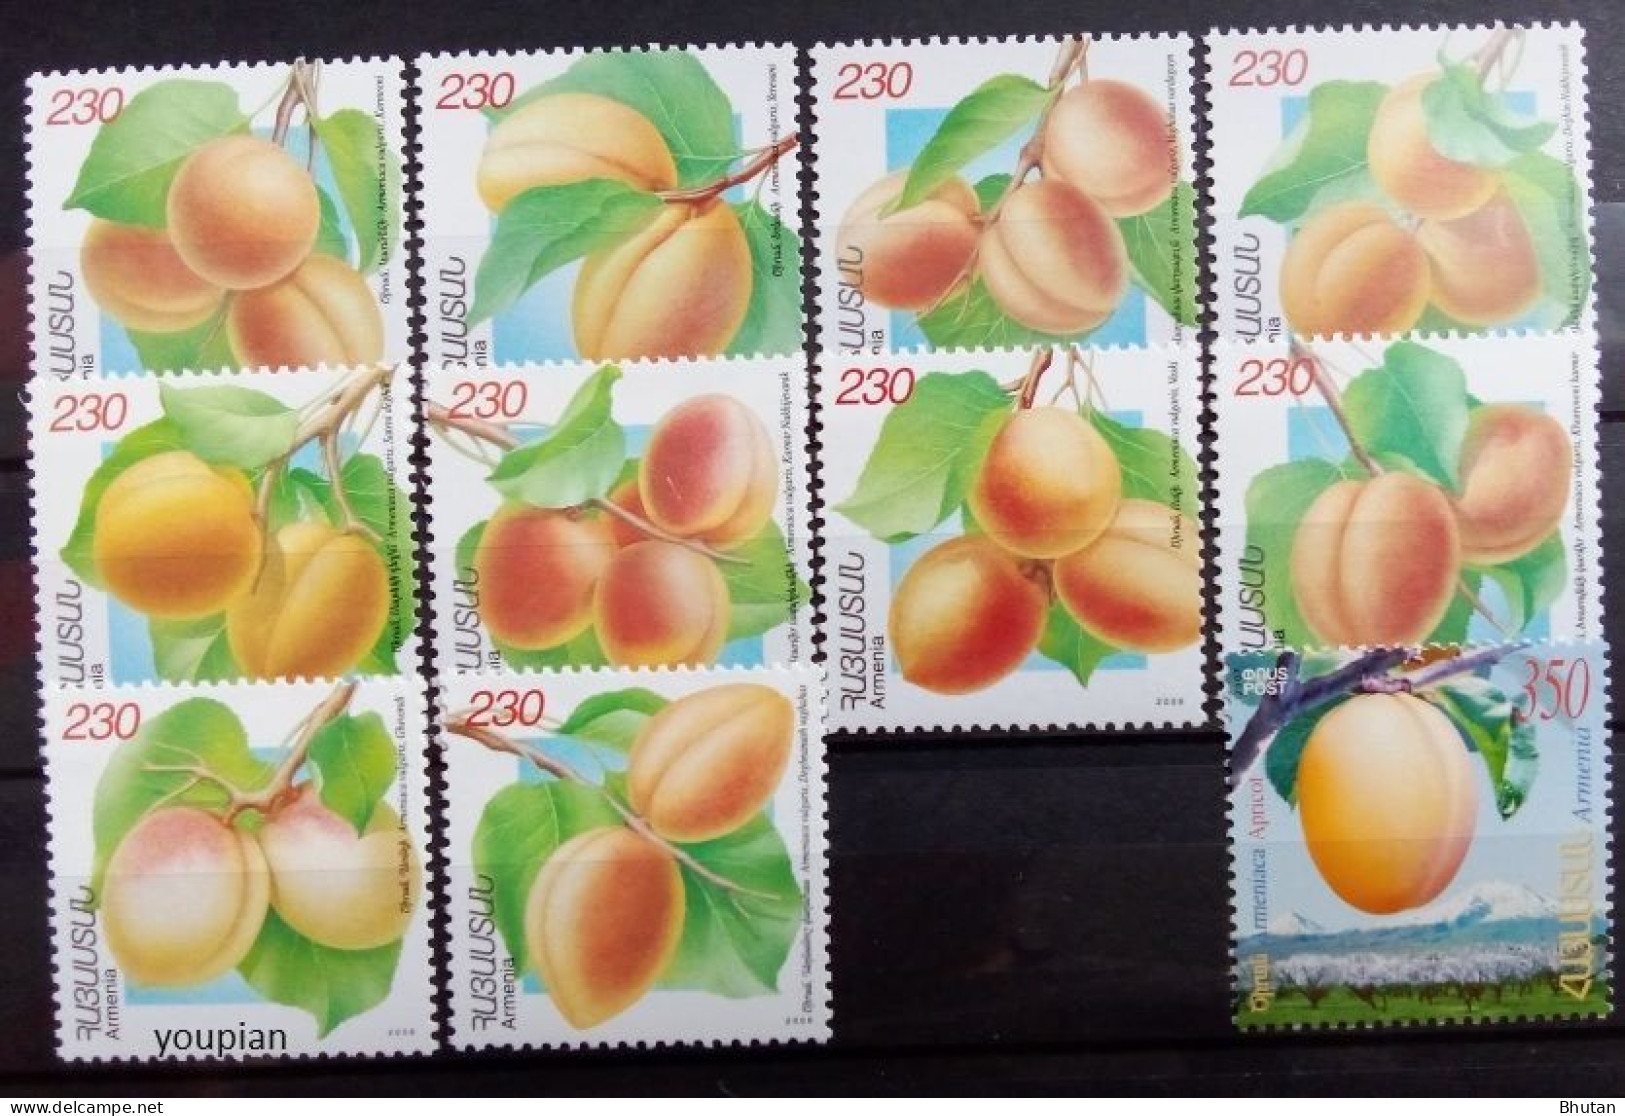 Armenia 2007, Apricots, MNH Stamps Set - Armenia